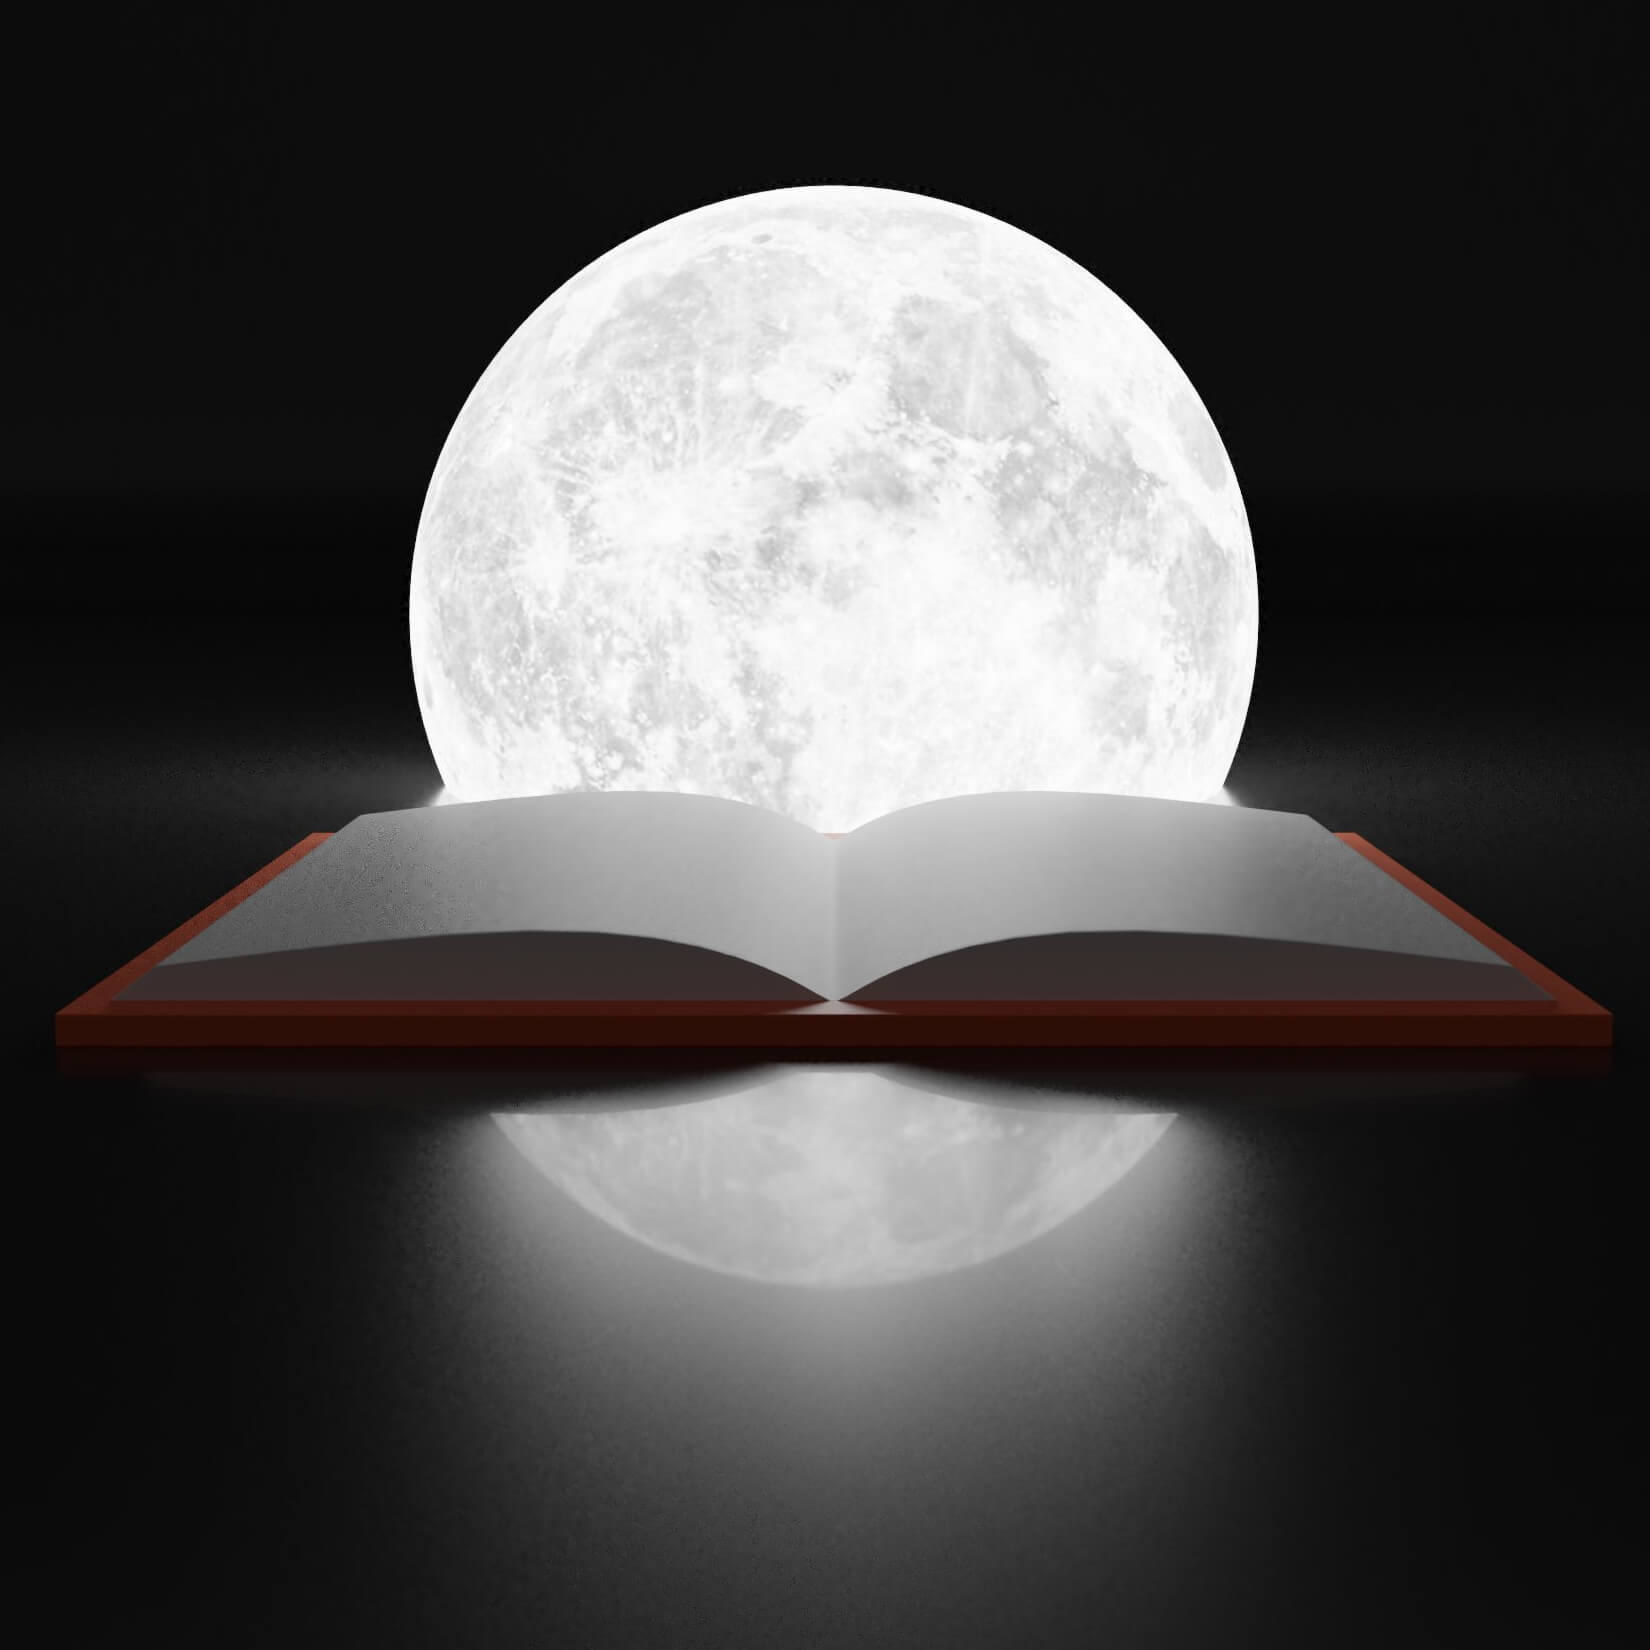 A 3d render of a moon cresting over an open book.